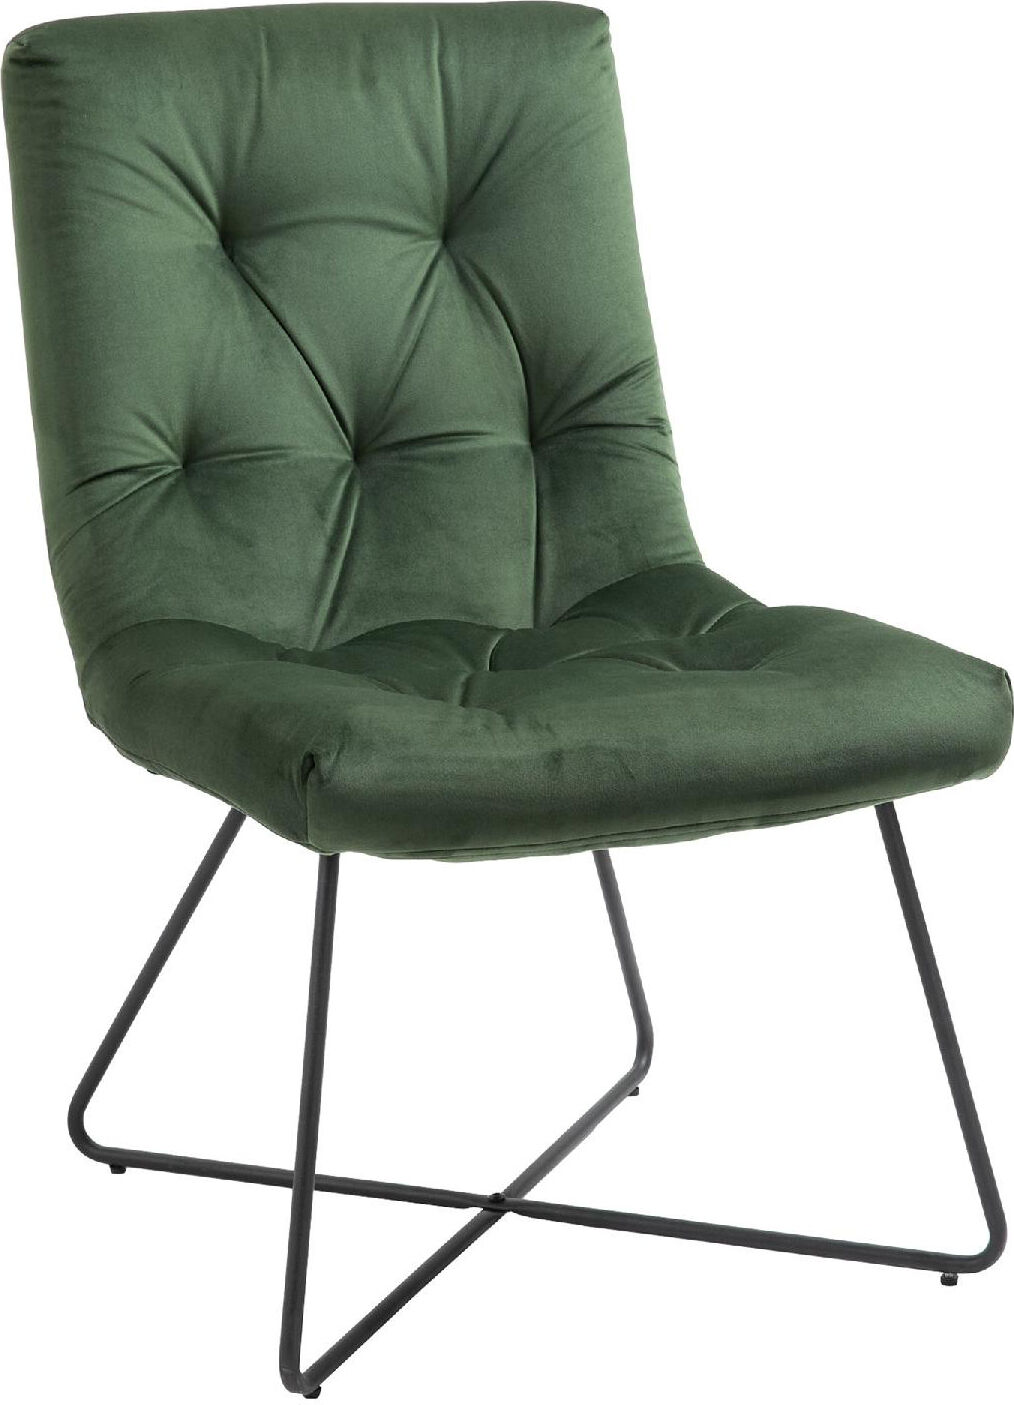 dechome 911gn833 sedia moderna imbottita in metallo nero e tessuto verde - 911gn833